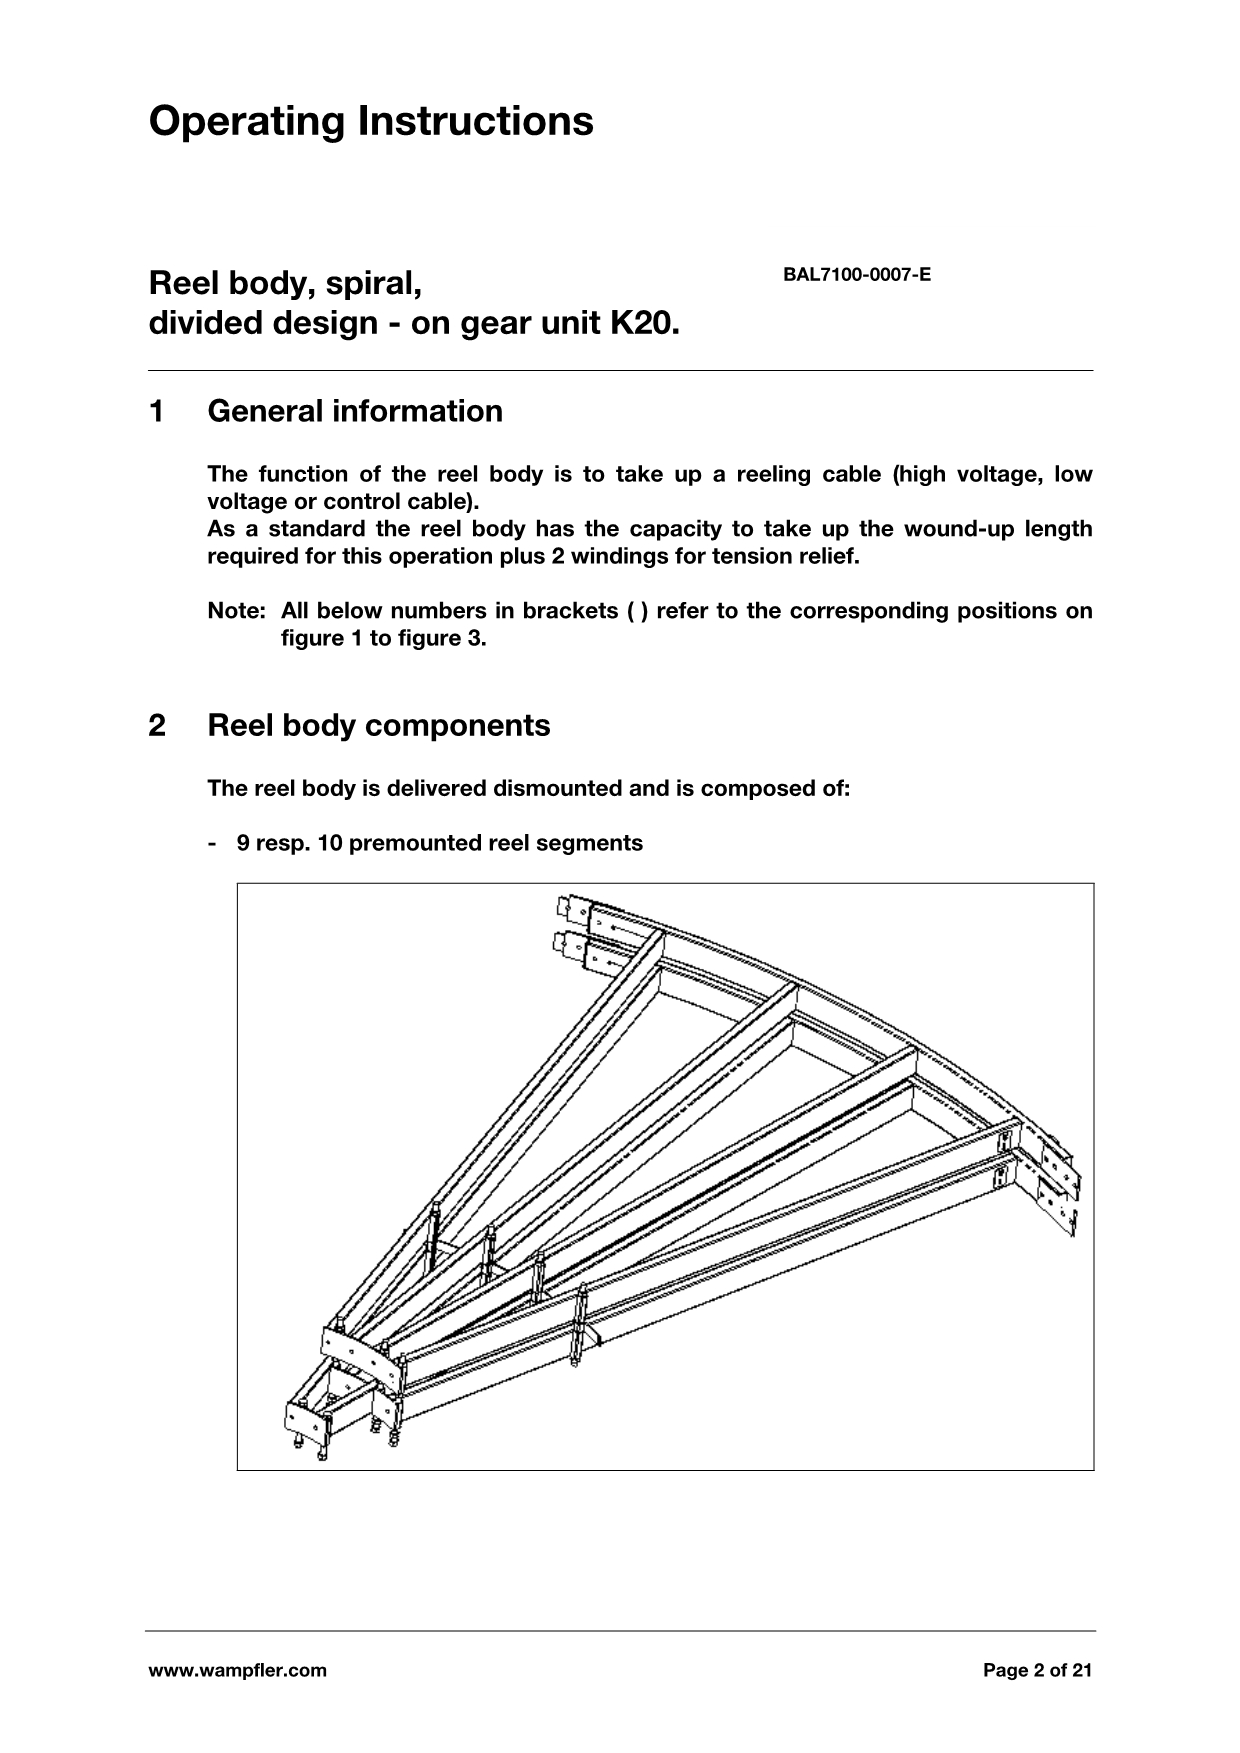 BAL7100-0007-E Drum body spiral - divided design - on gear u_第2页